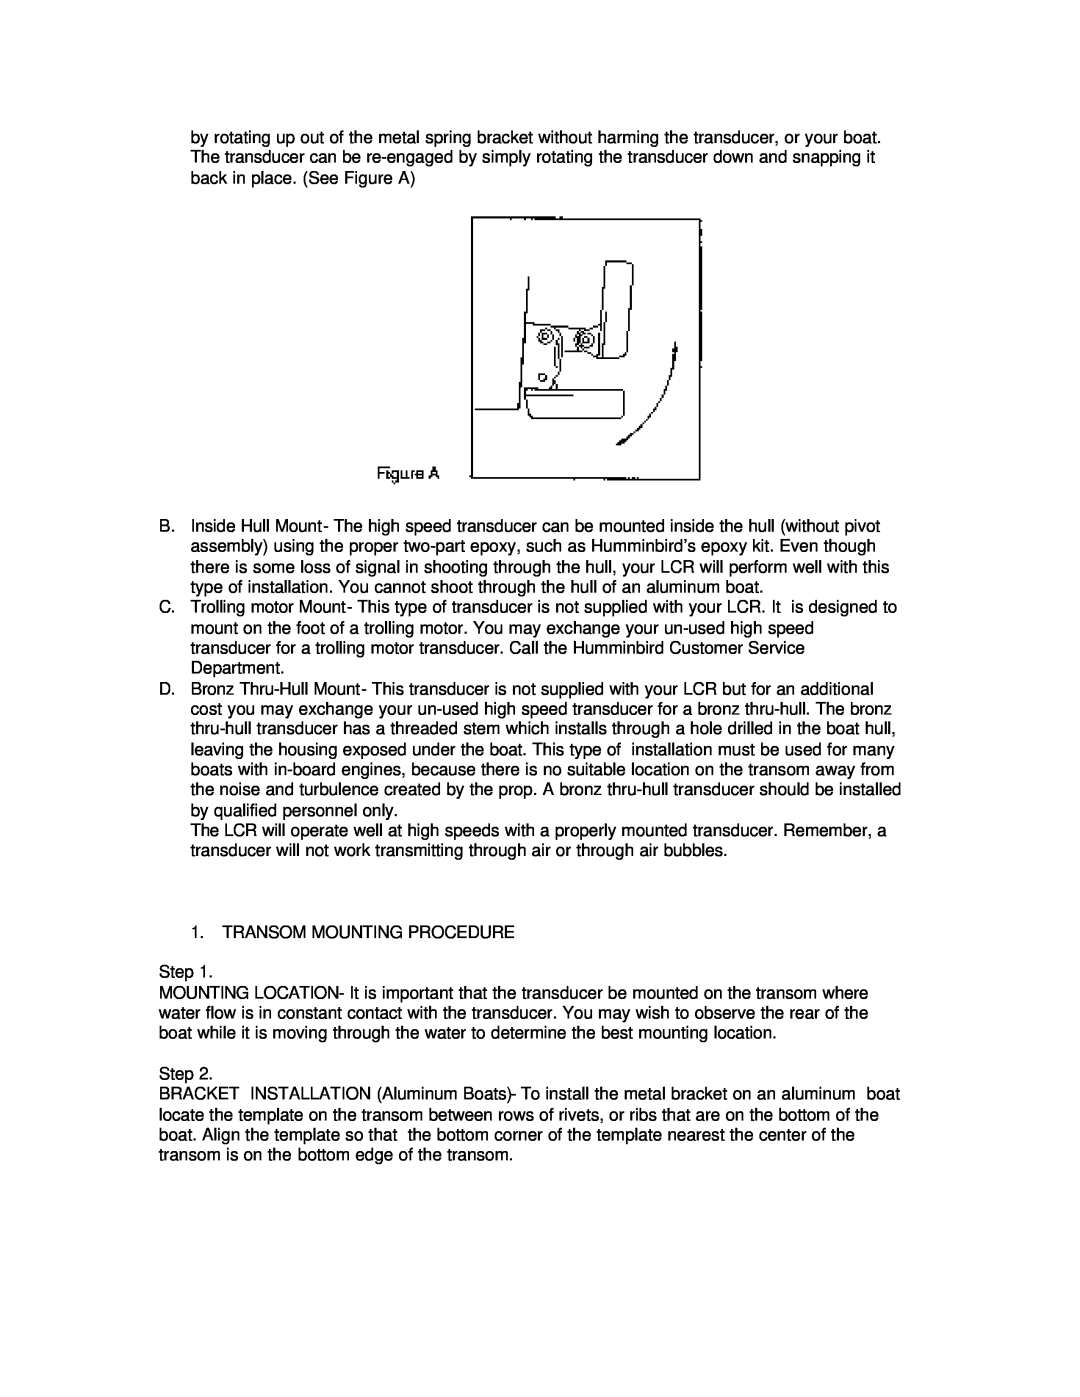 Humminbird LCR 3D manual TRANSOM MOUNTING PROCEDURE Step 